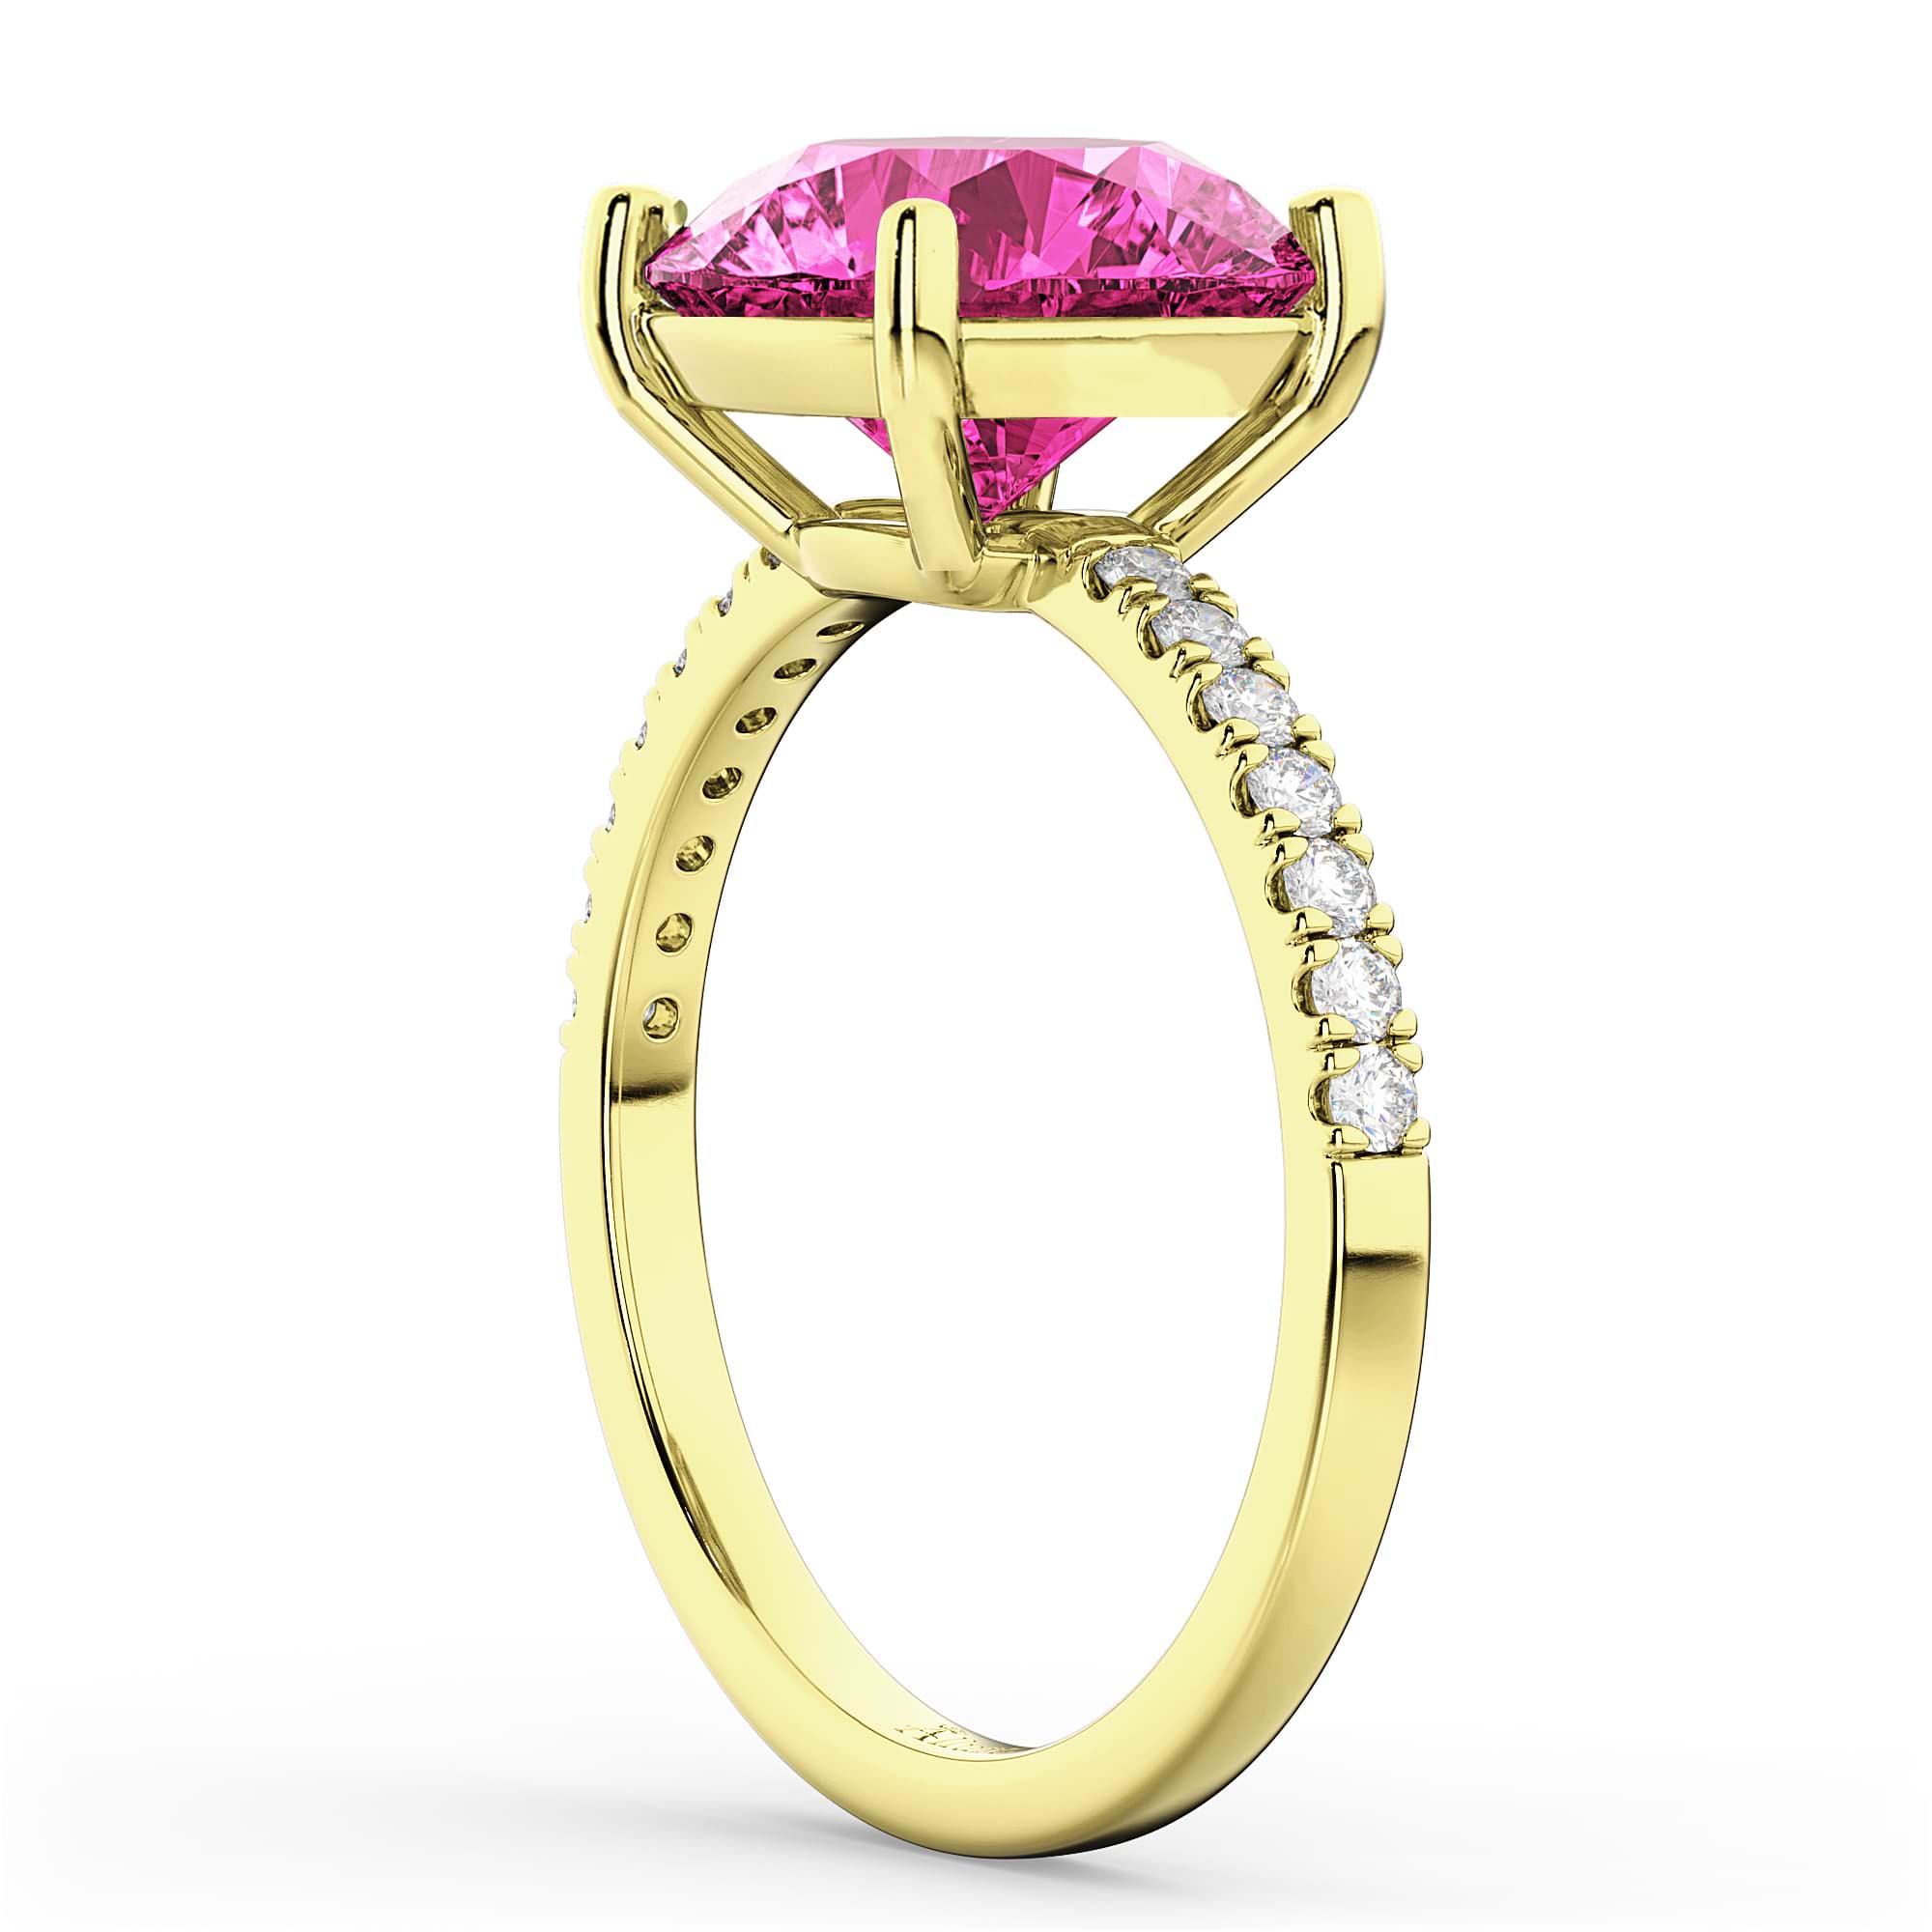 Pink Tourmaline & Diamond Engagement Ring 14K Yellow Gold 2.21ct